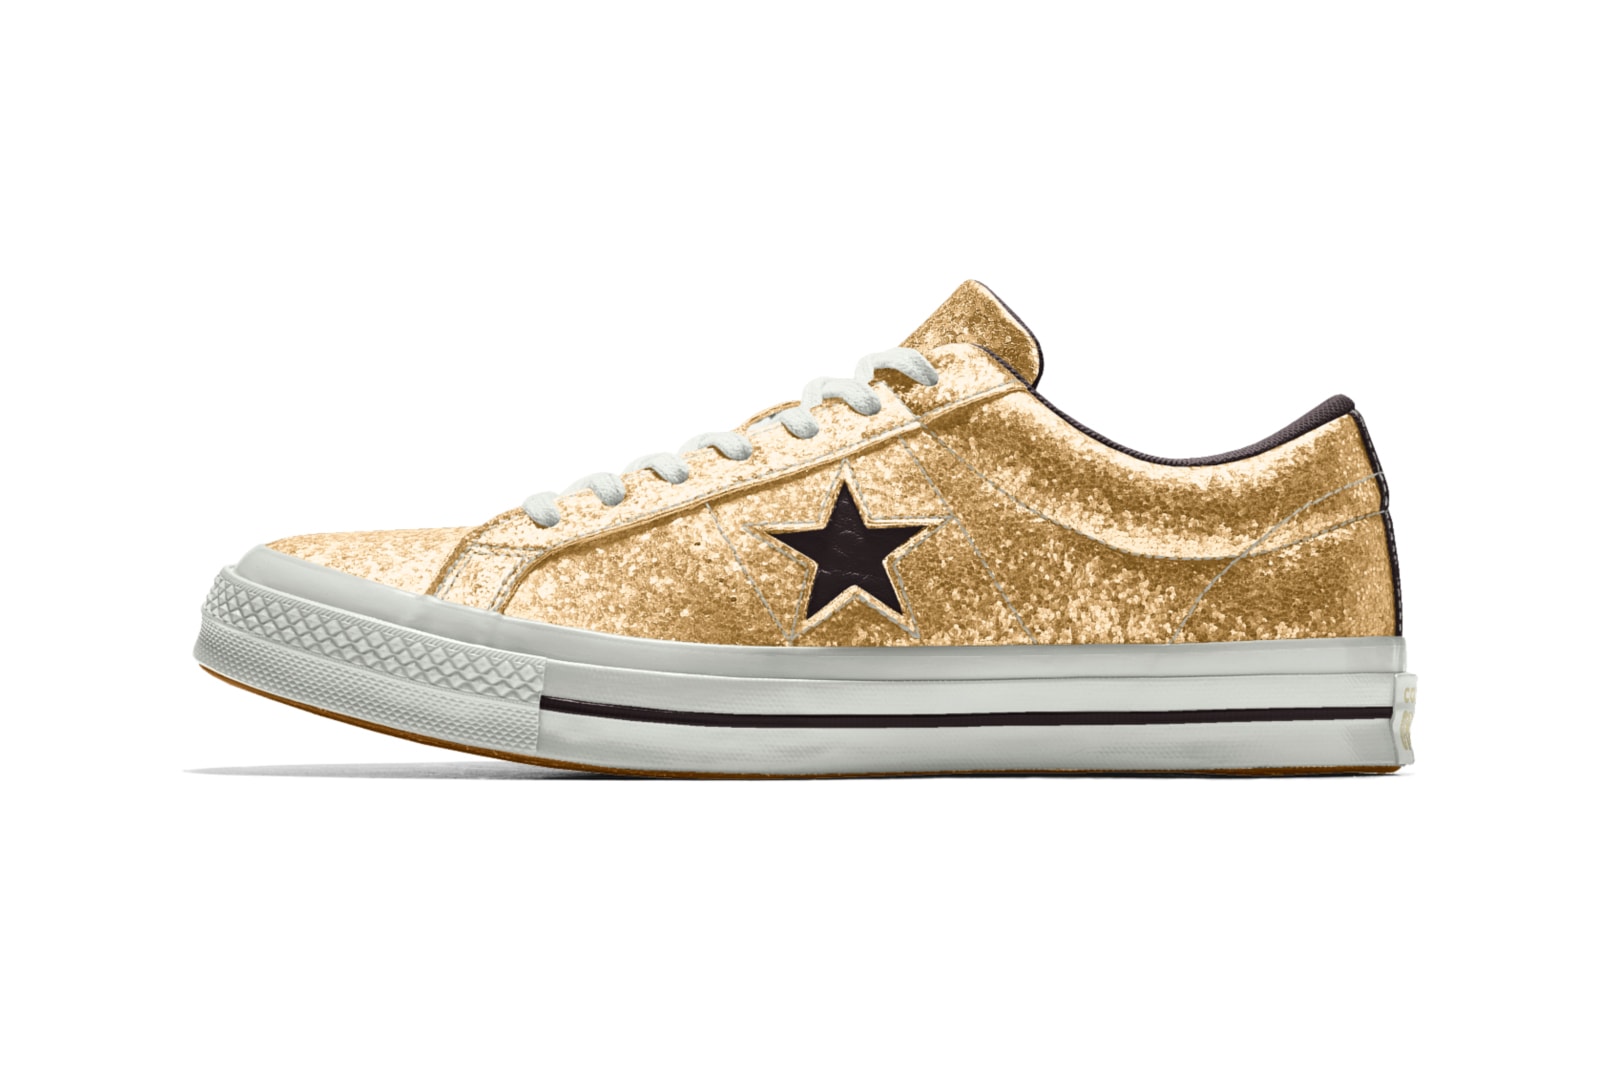 Customize Converse One Star Glitter NIKEid Gold Silver Rose Quartz Pink Sneakers